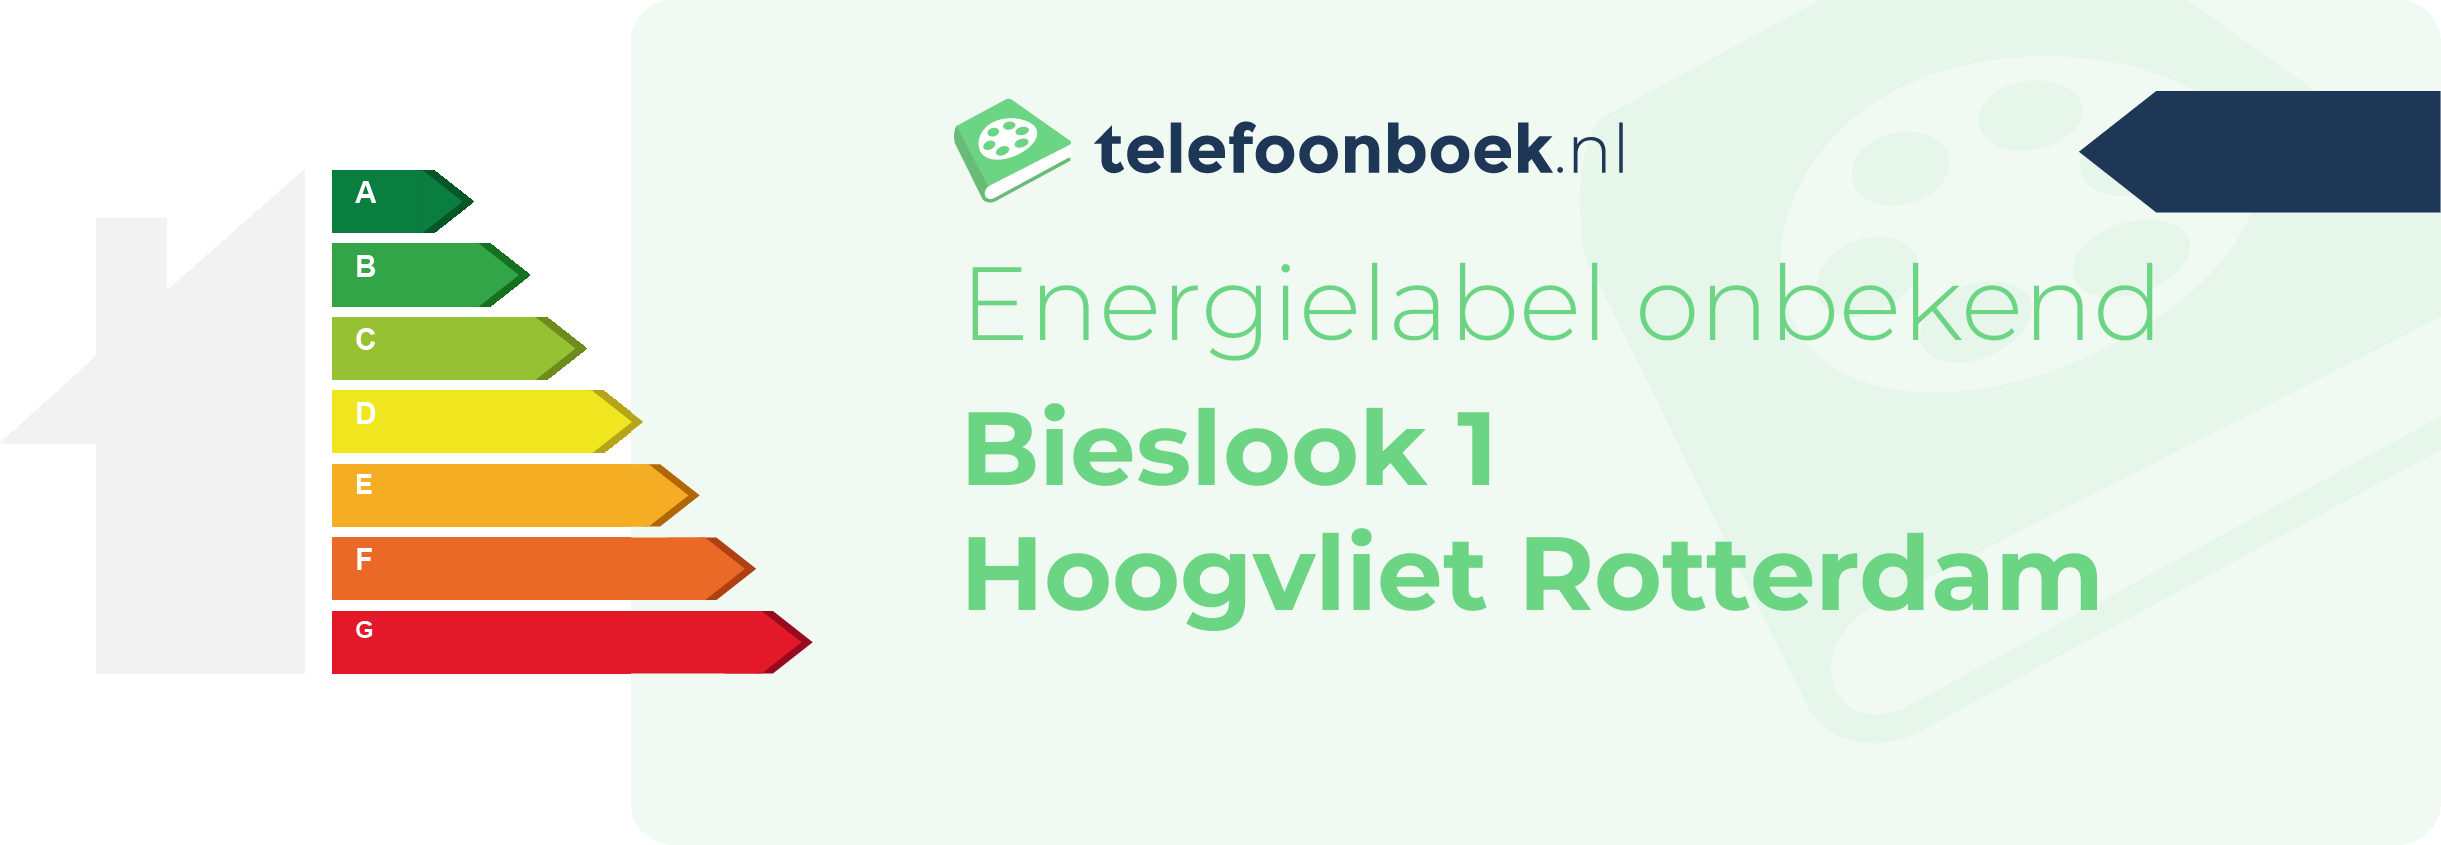 Energielabel Bieslook 1 Hoogvliet Rotterdam